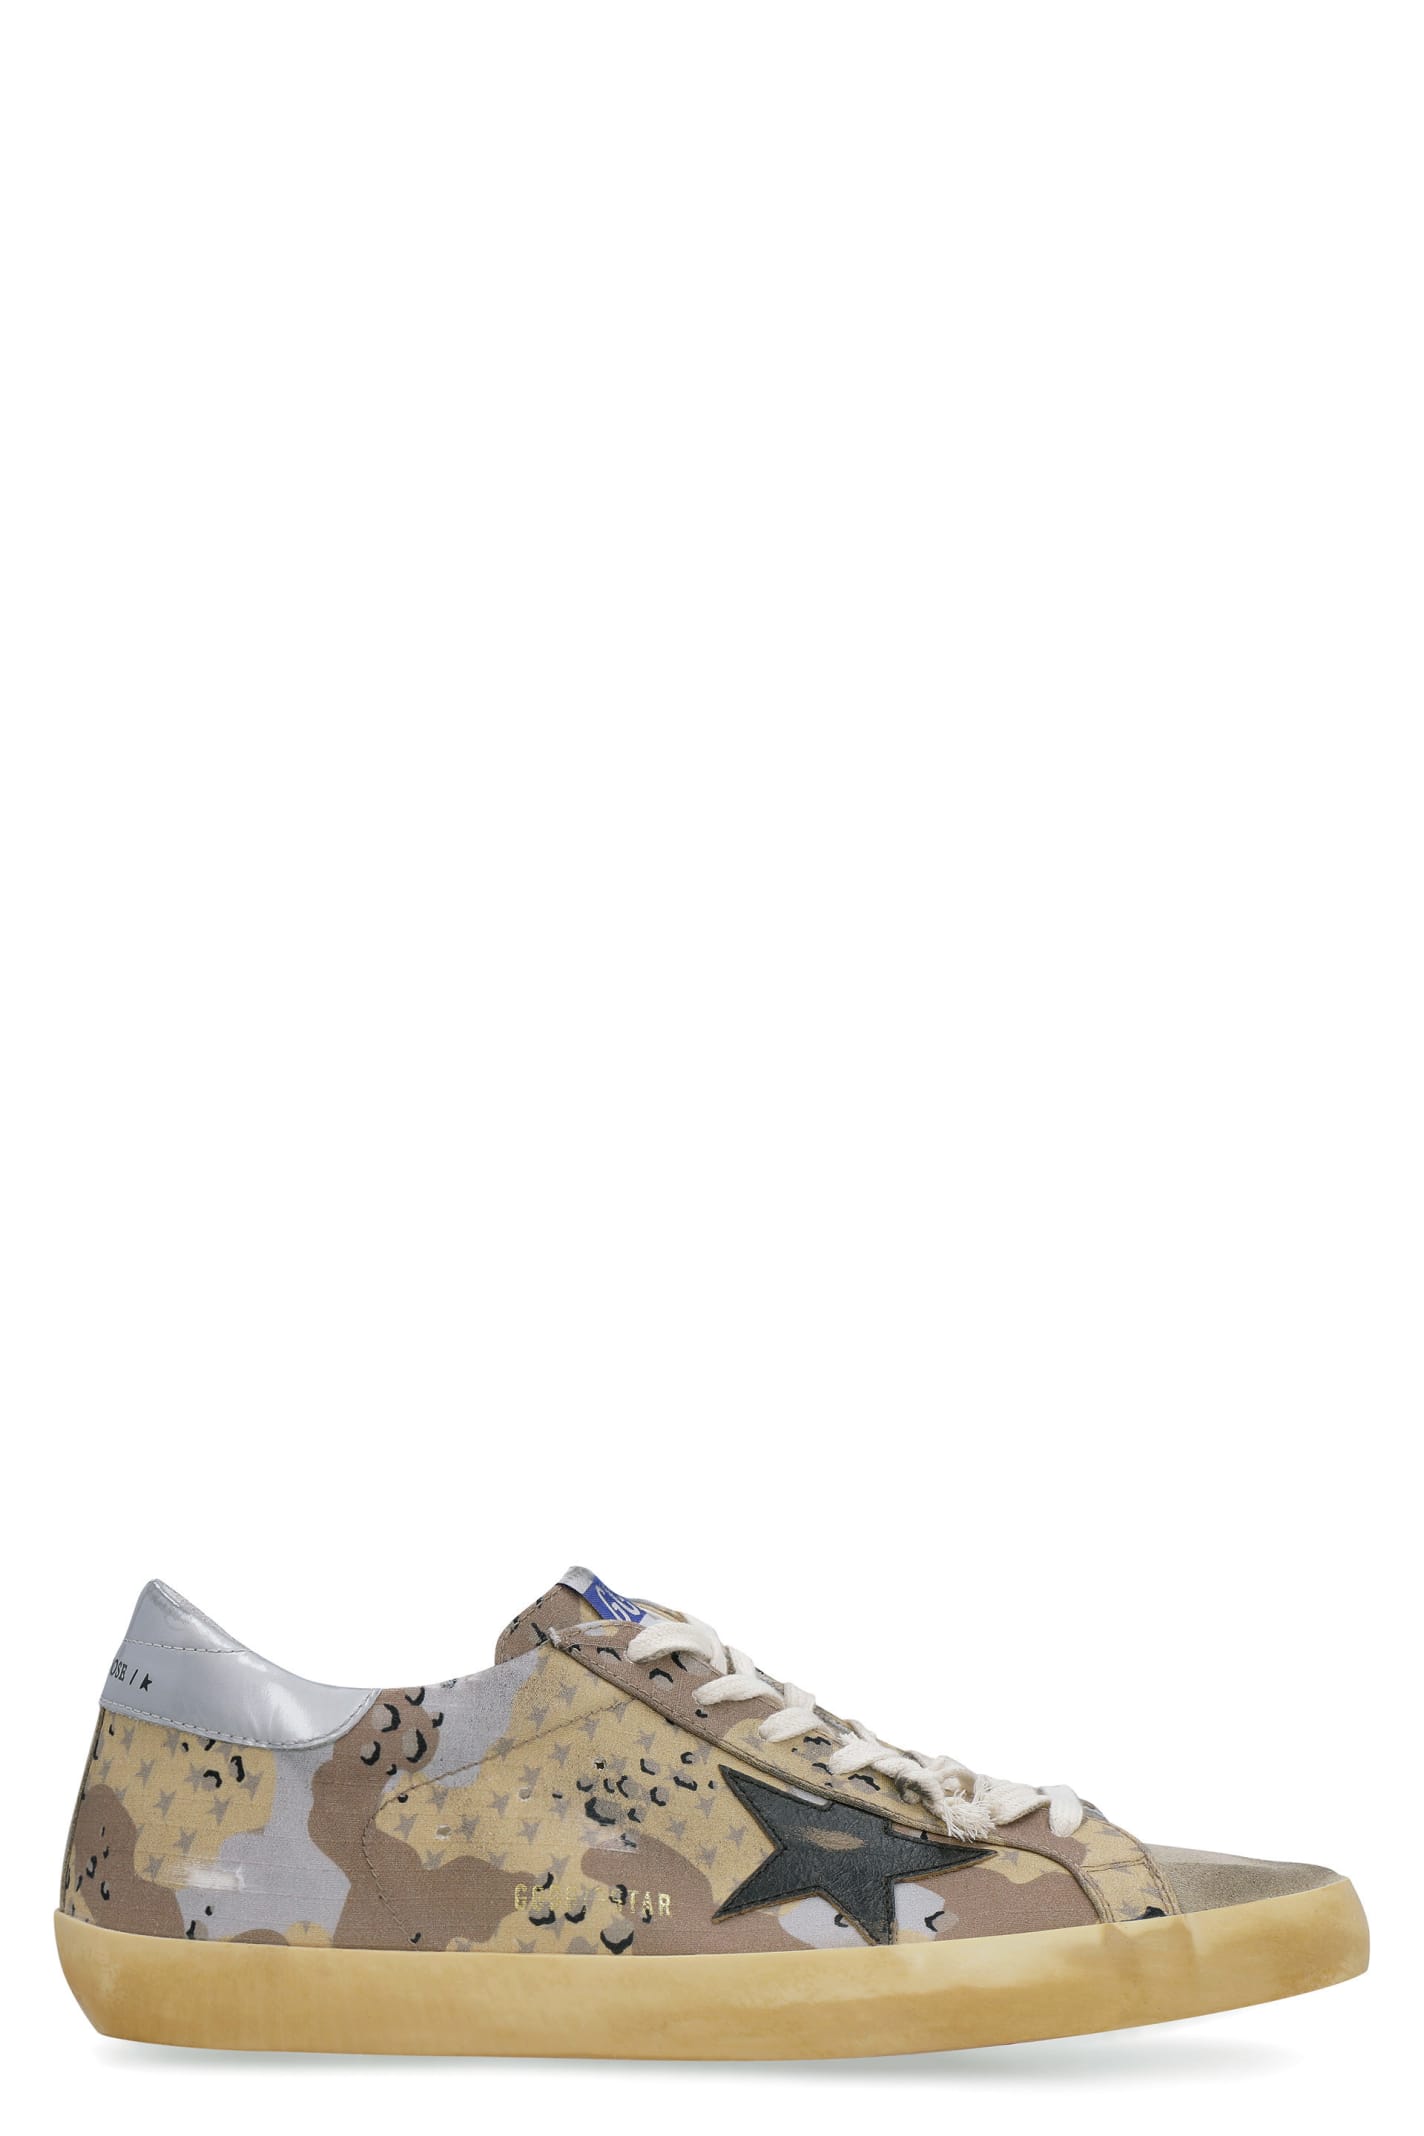 Golden Goose Super-star Canvas Sneakers